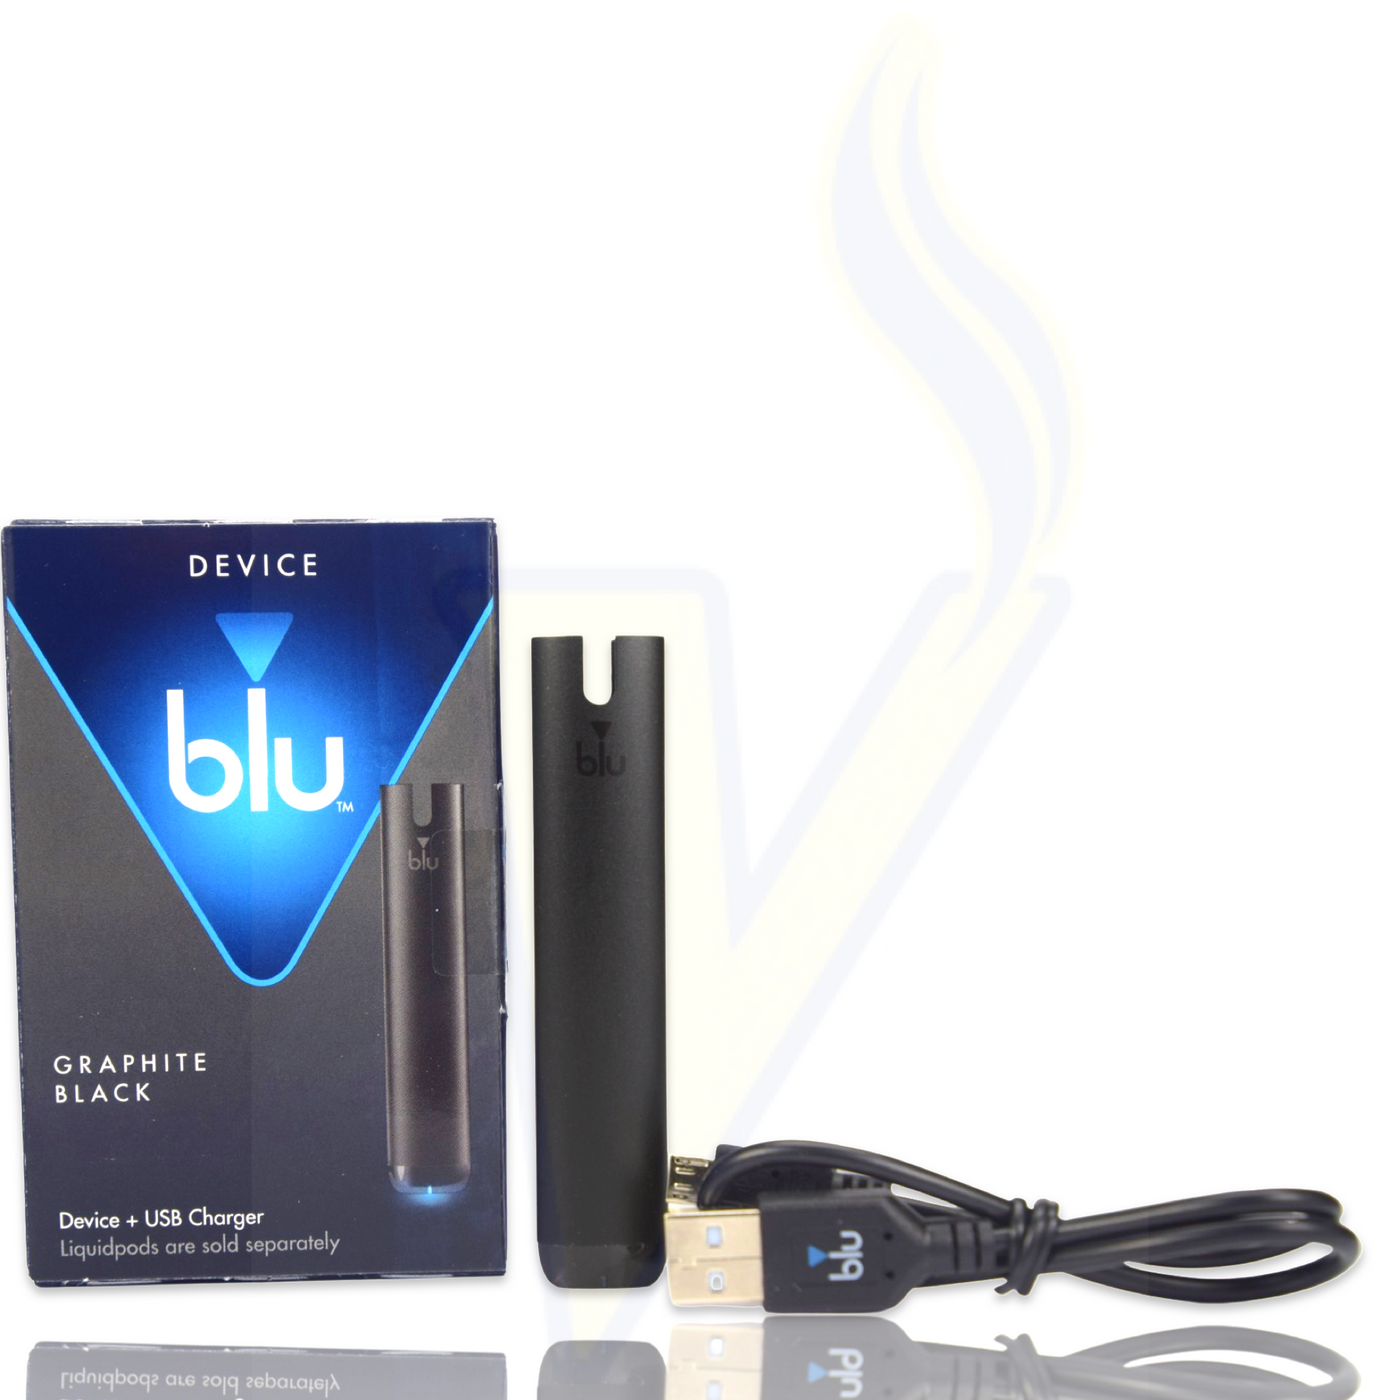 Blu Device Kit